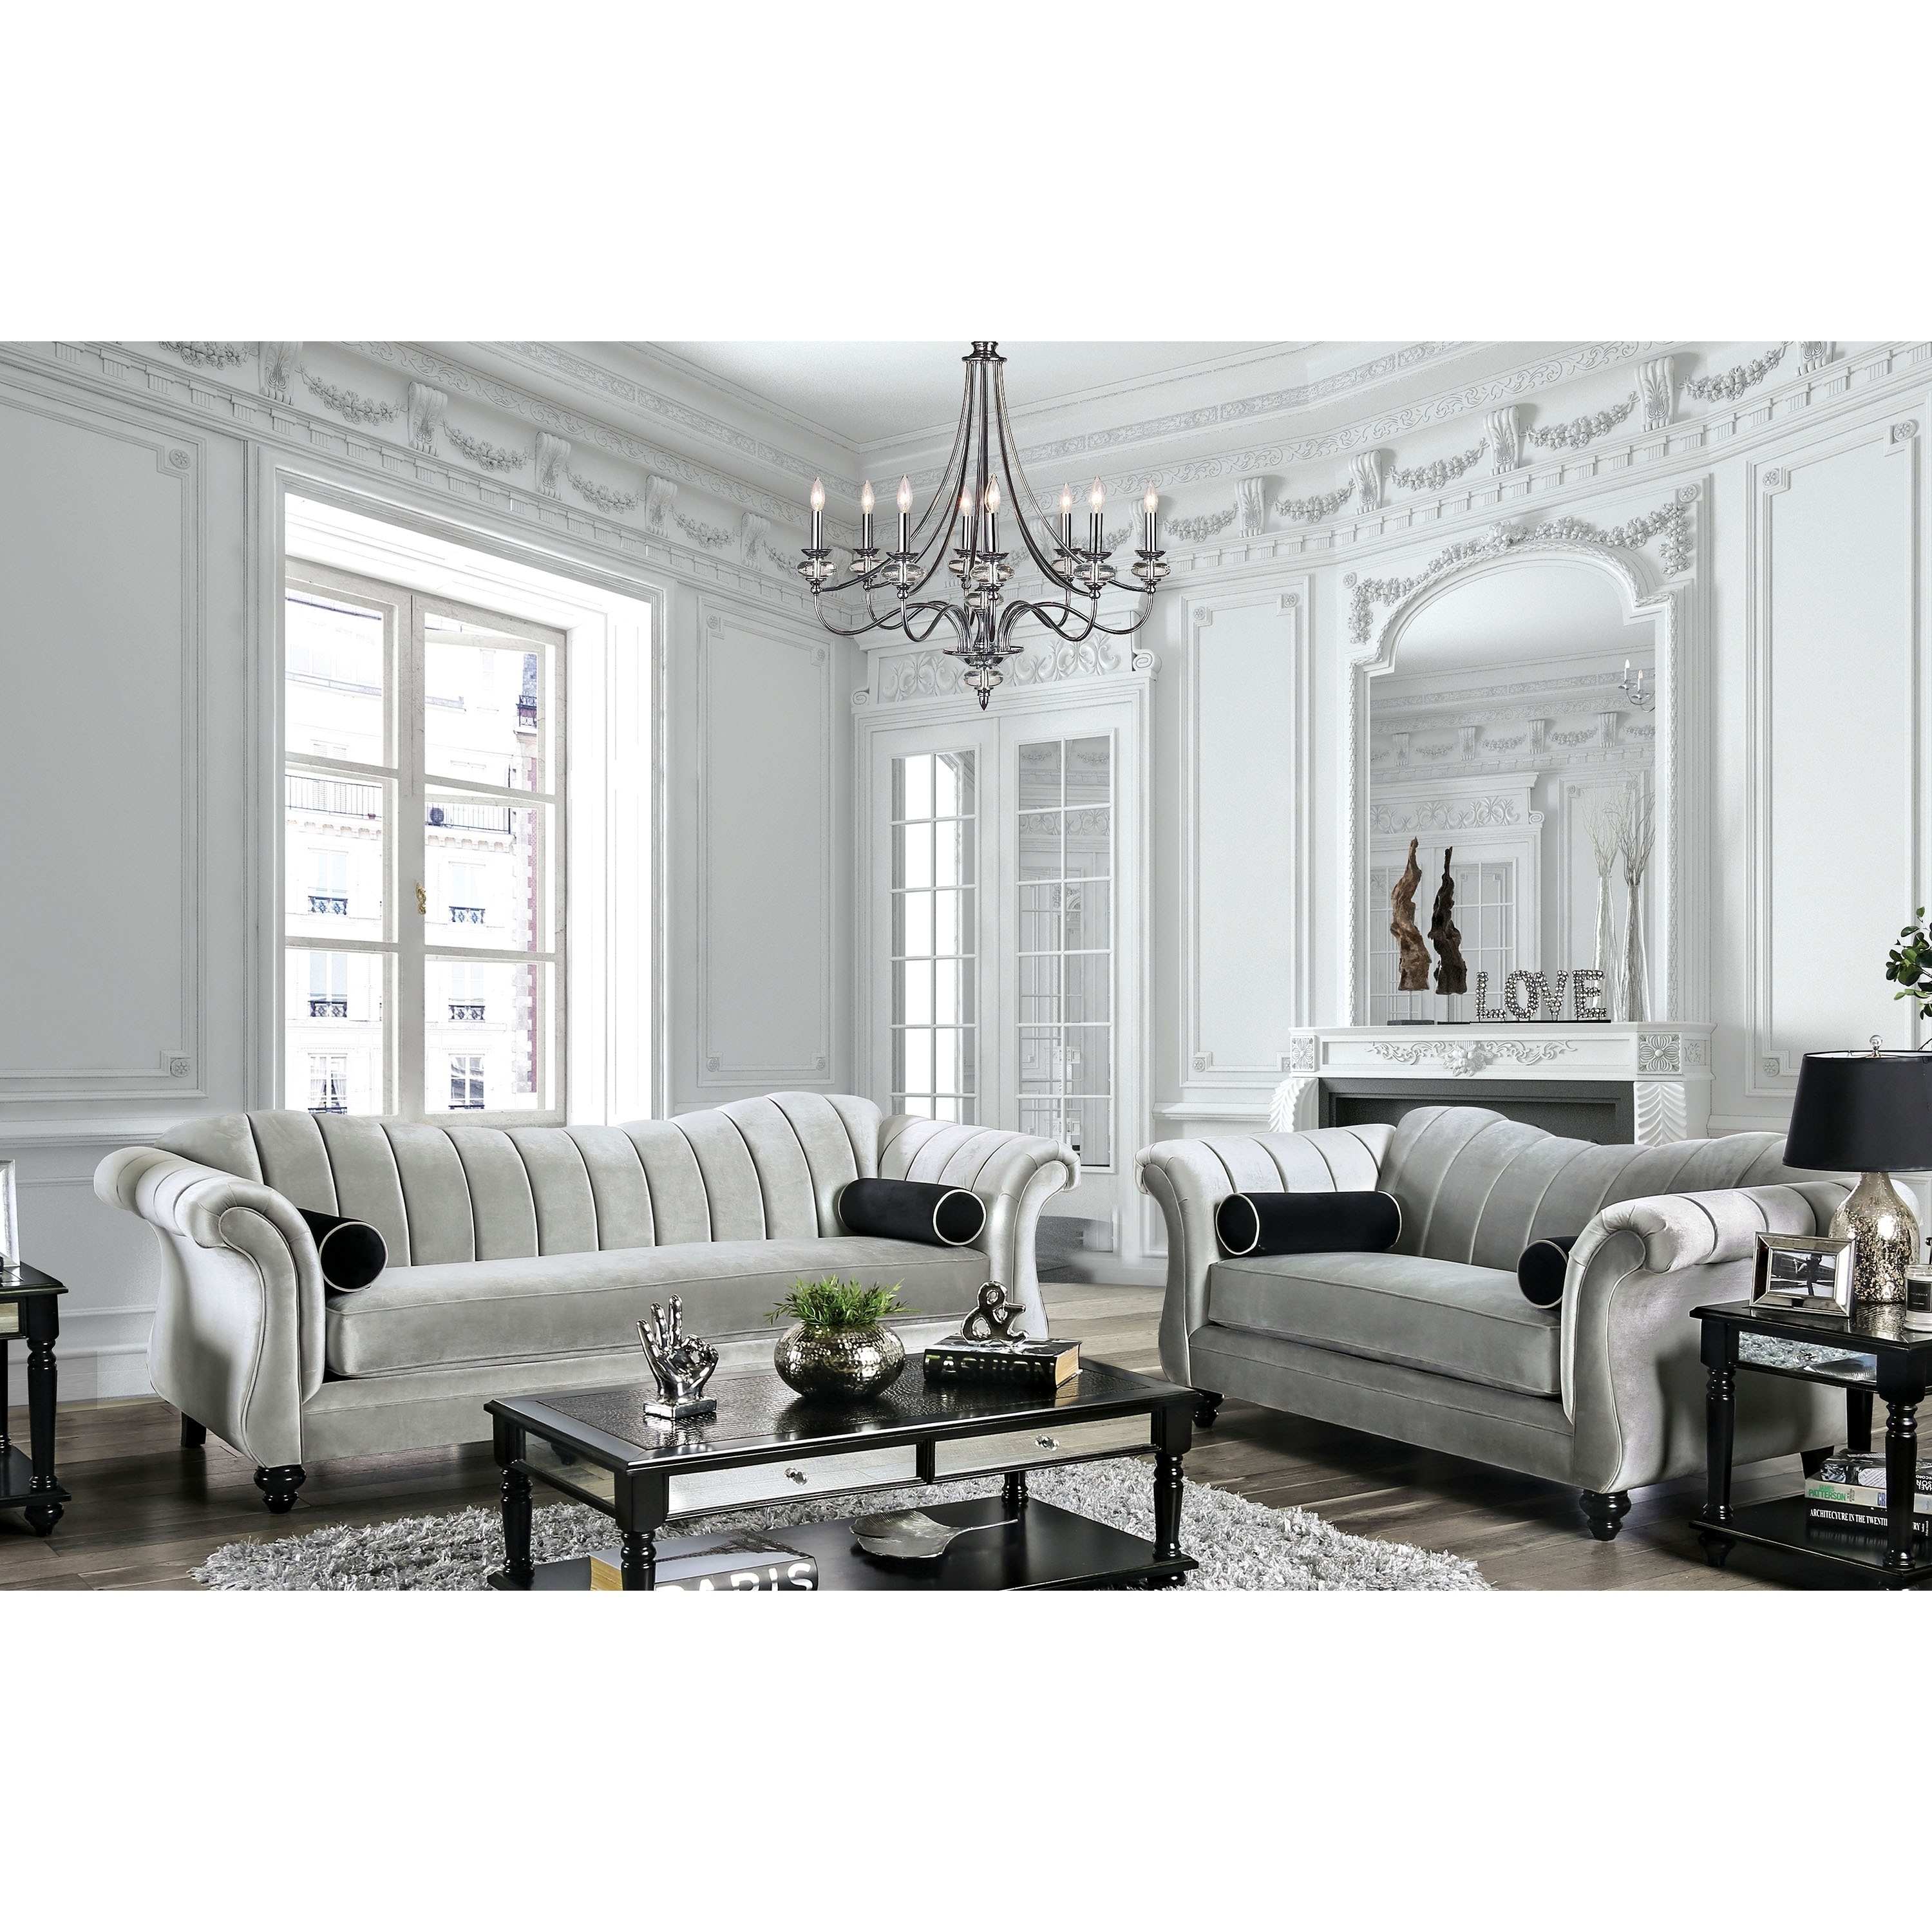 Furniture Of America Graciela Glam Pewter 2 Piece Living Room Set On Sale Overstock 28405186